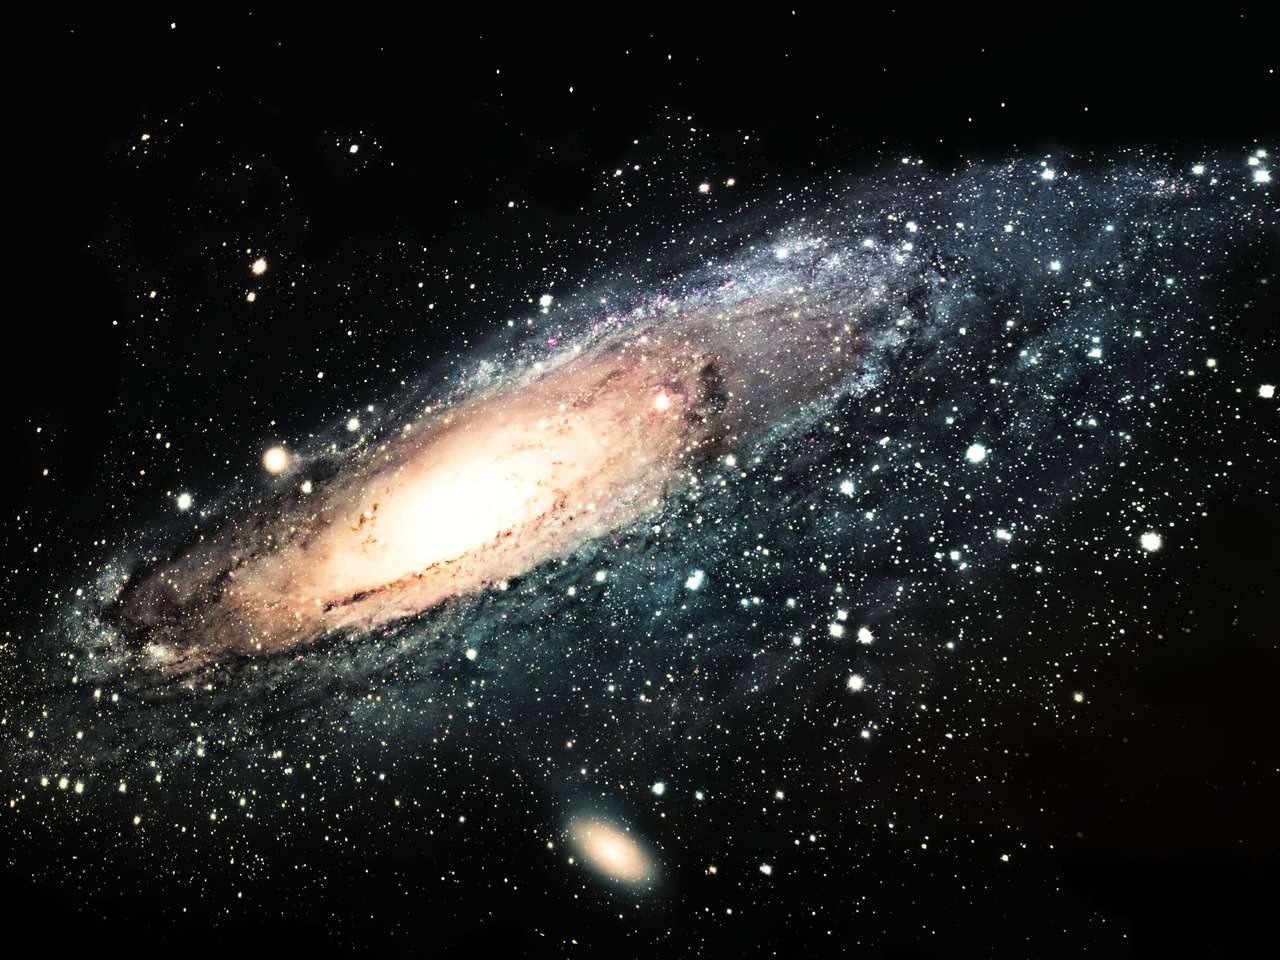 Galáxia espiral espetacular quebra-cabeças online